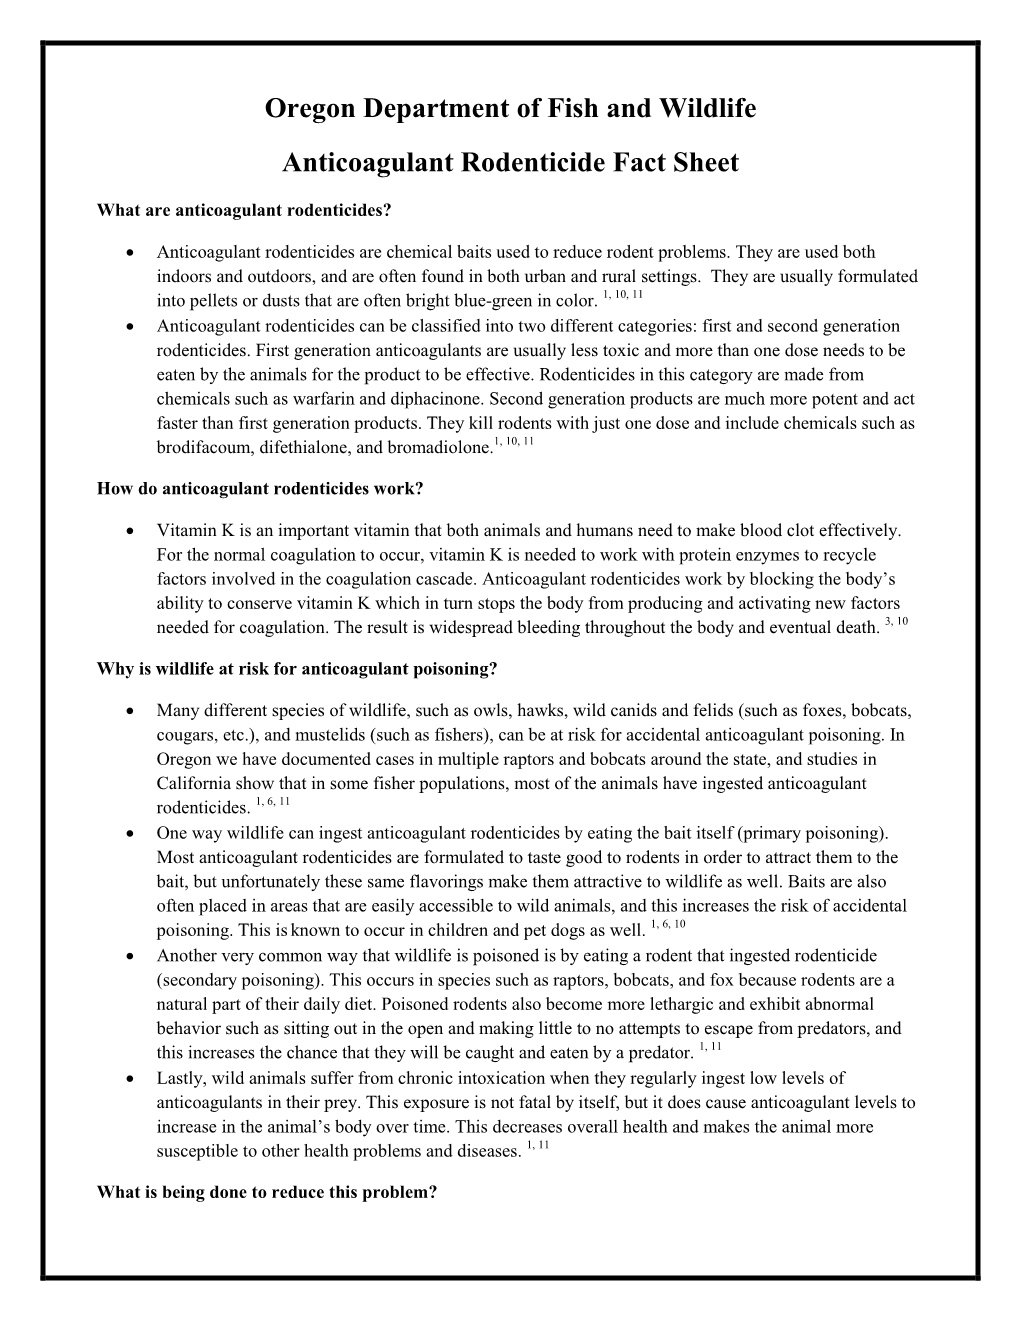 Oregon Department of Fish and Wildlife Anticoagulant Rodenticide Fact Sheet